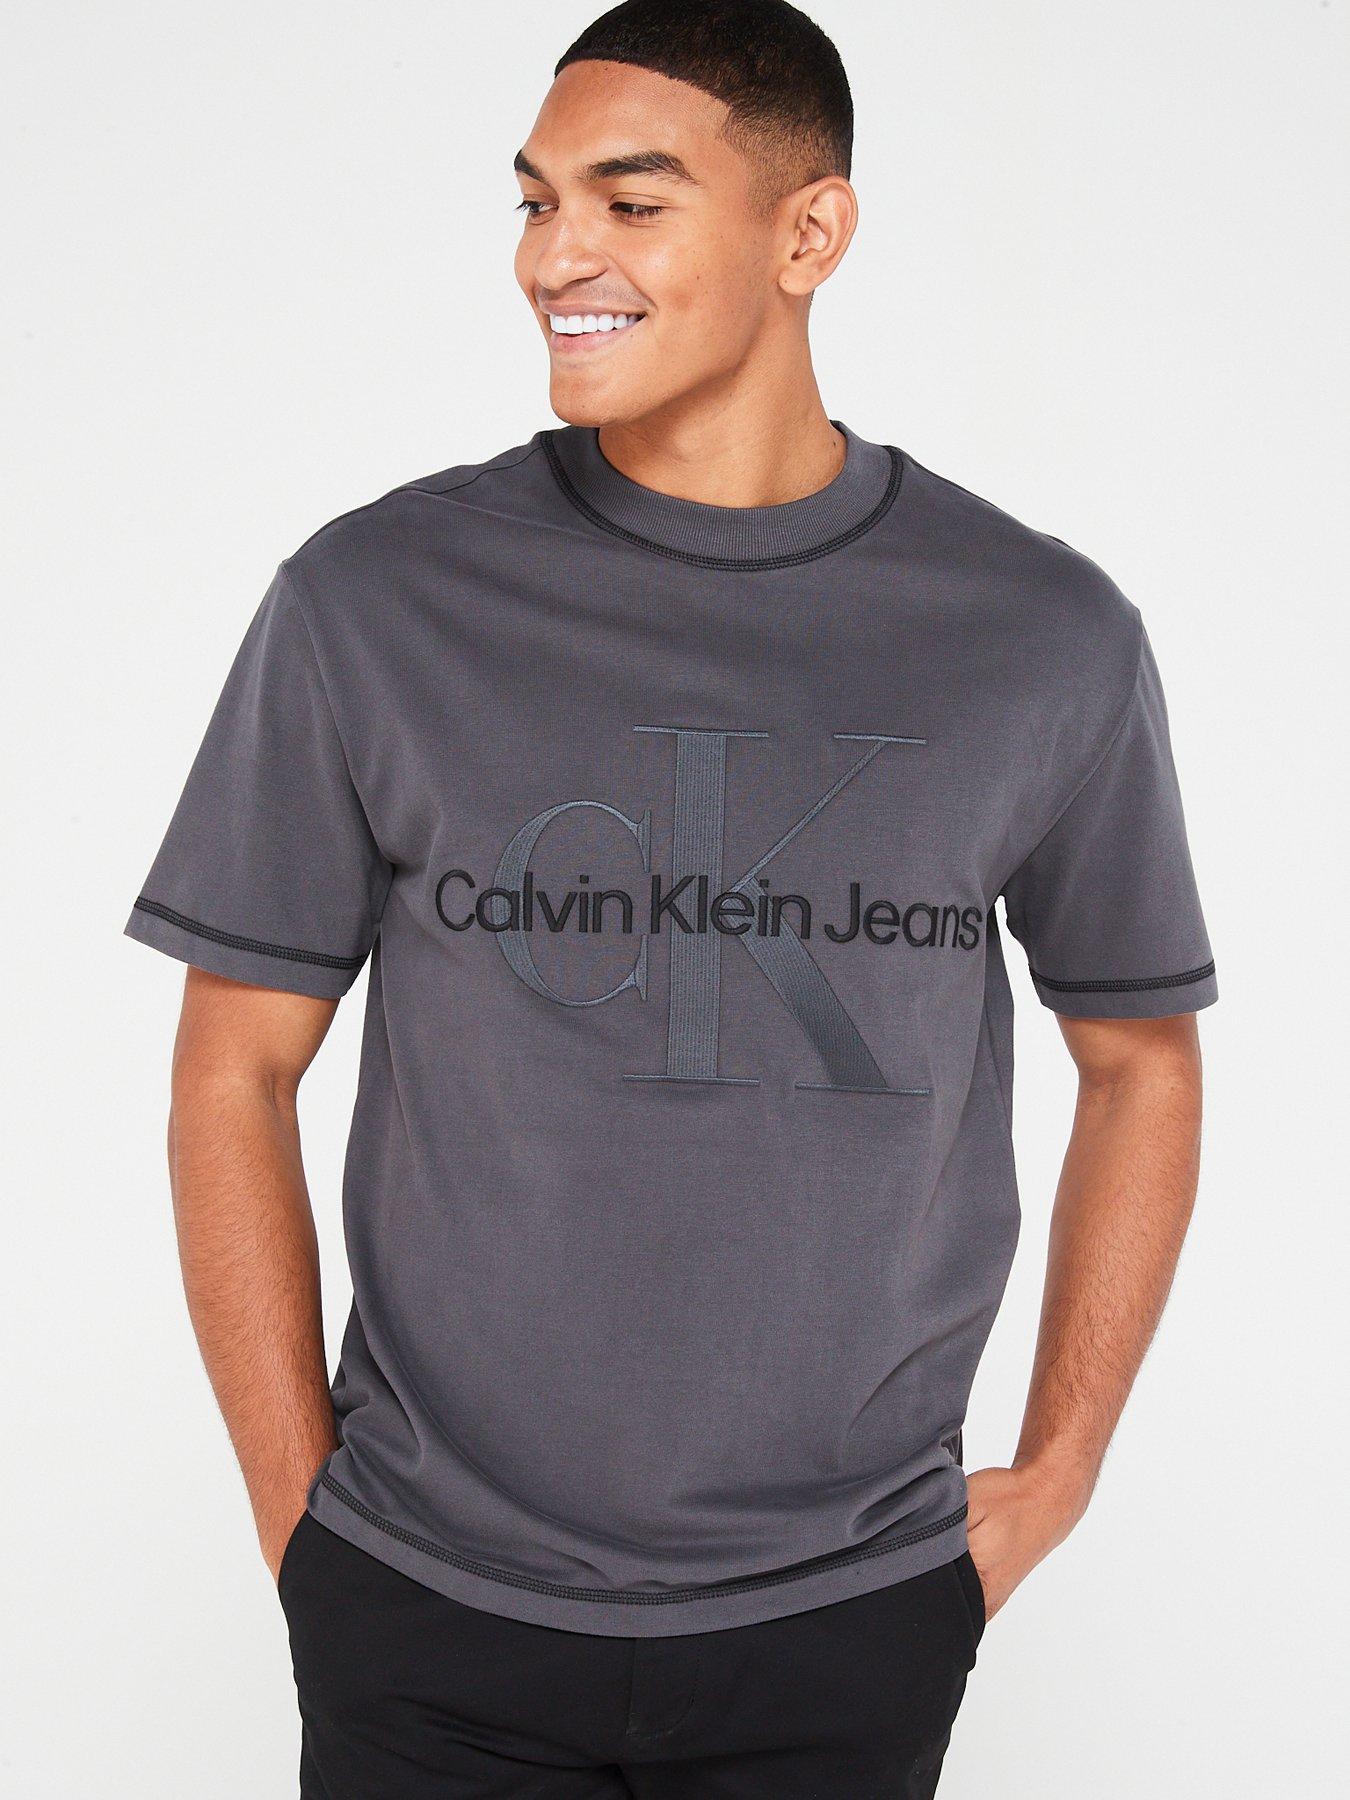 Calvin Klein CKJ Water-Sky Print Fashion Tee - Smoked Pearl - Mens